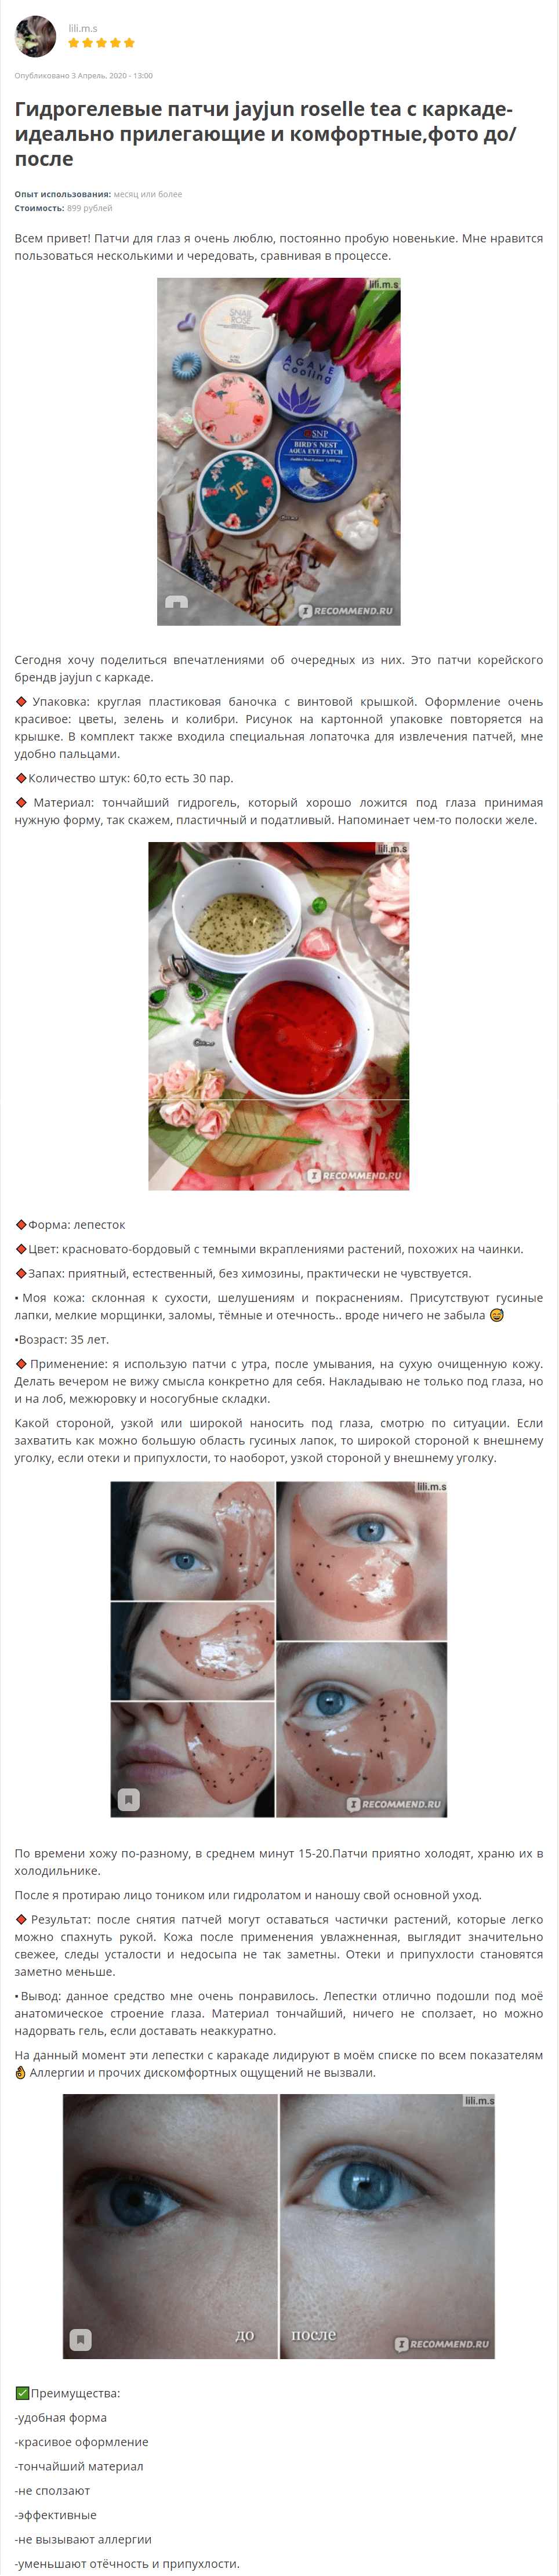 Roselle Tea Eye Gel Patch [Jayjun Cosmetic] отзыв 2 (1)